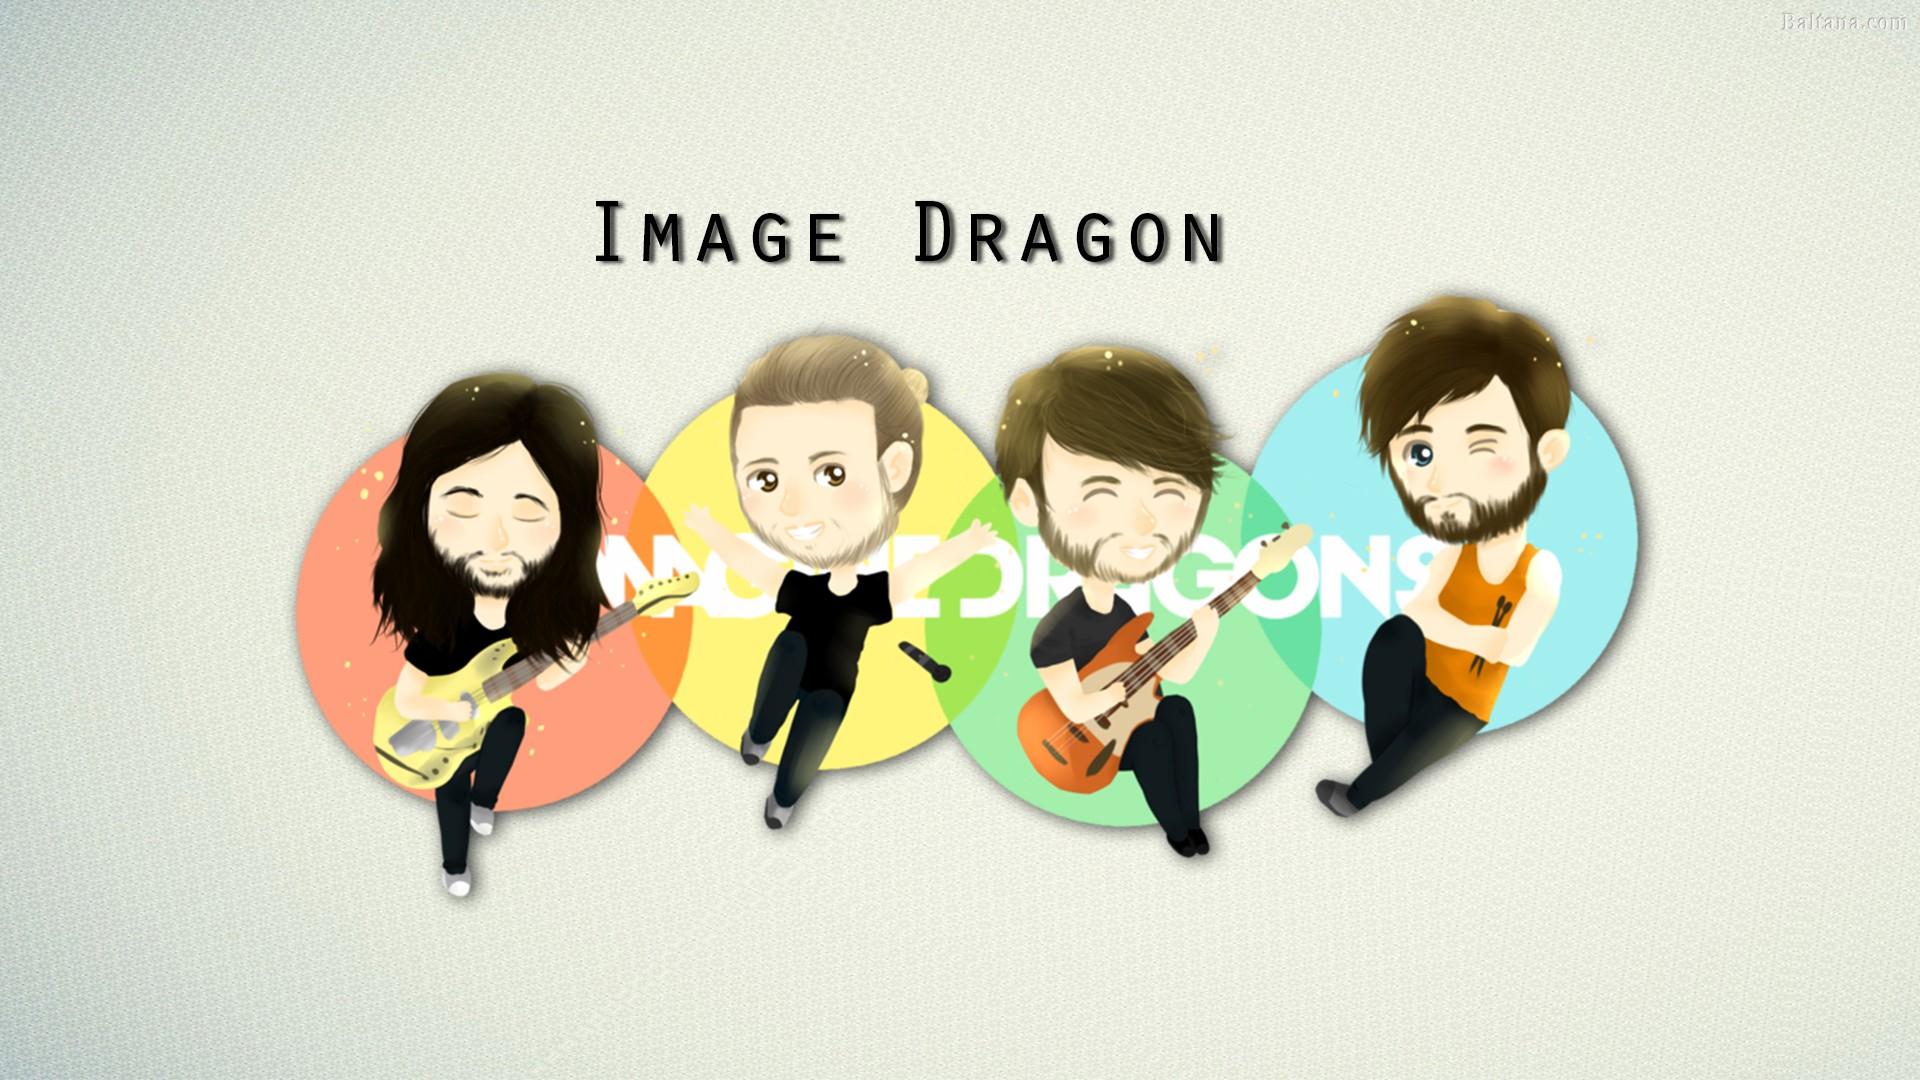 Imagine Dragons Wallpaper HD Background, Image, Pics, Photo Free